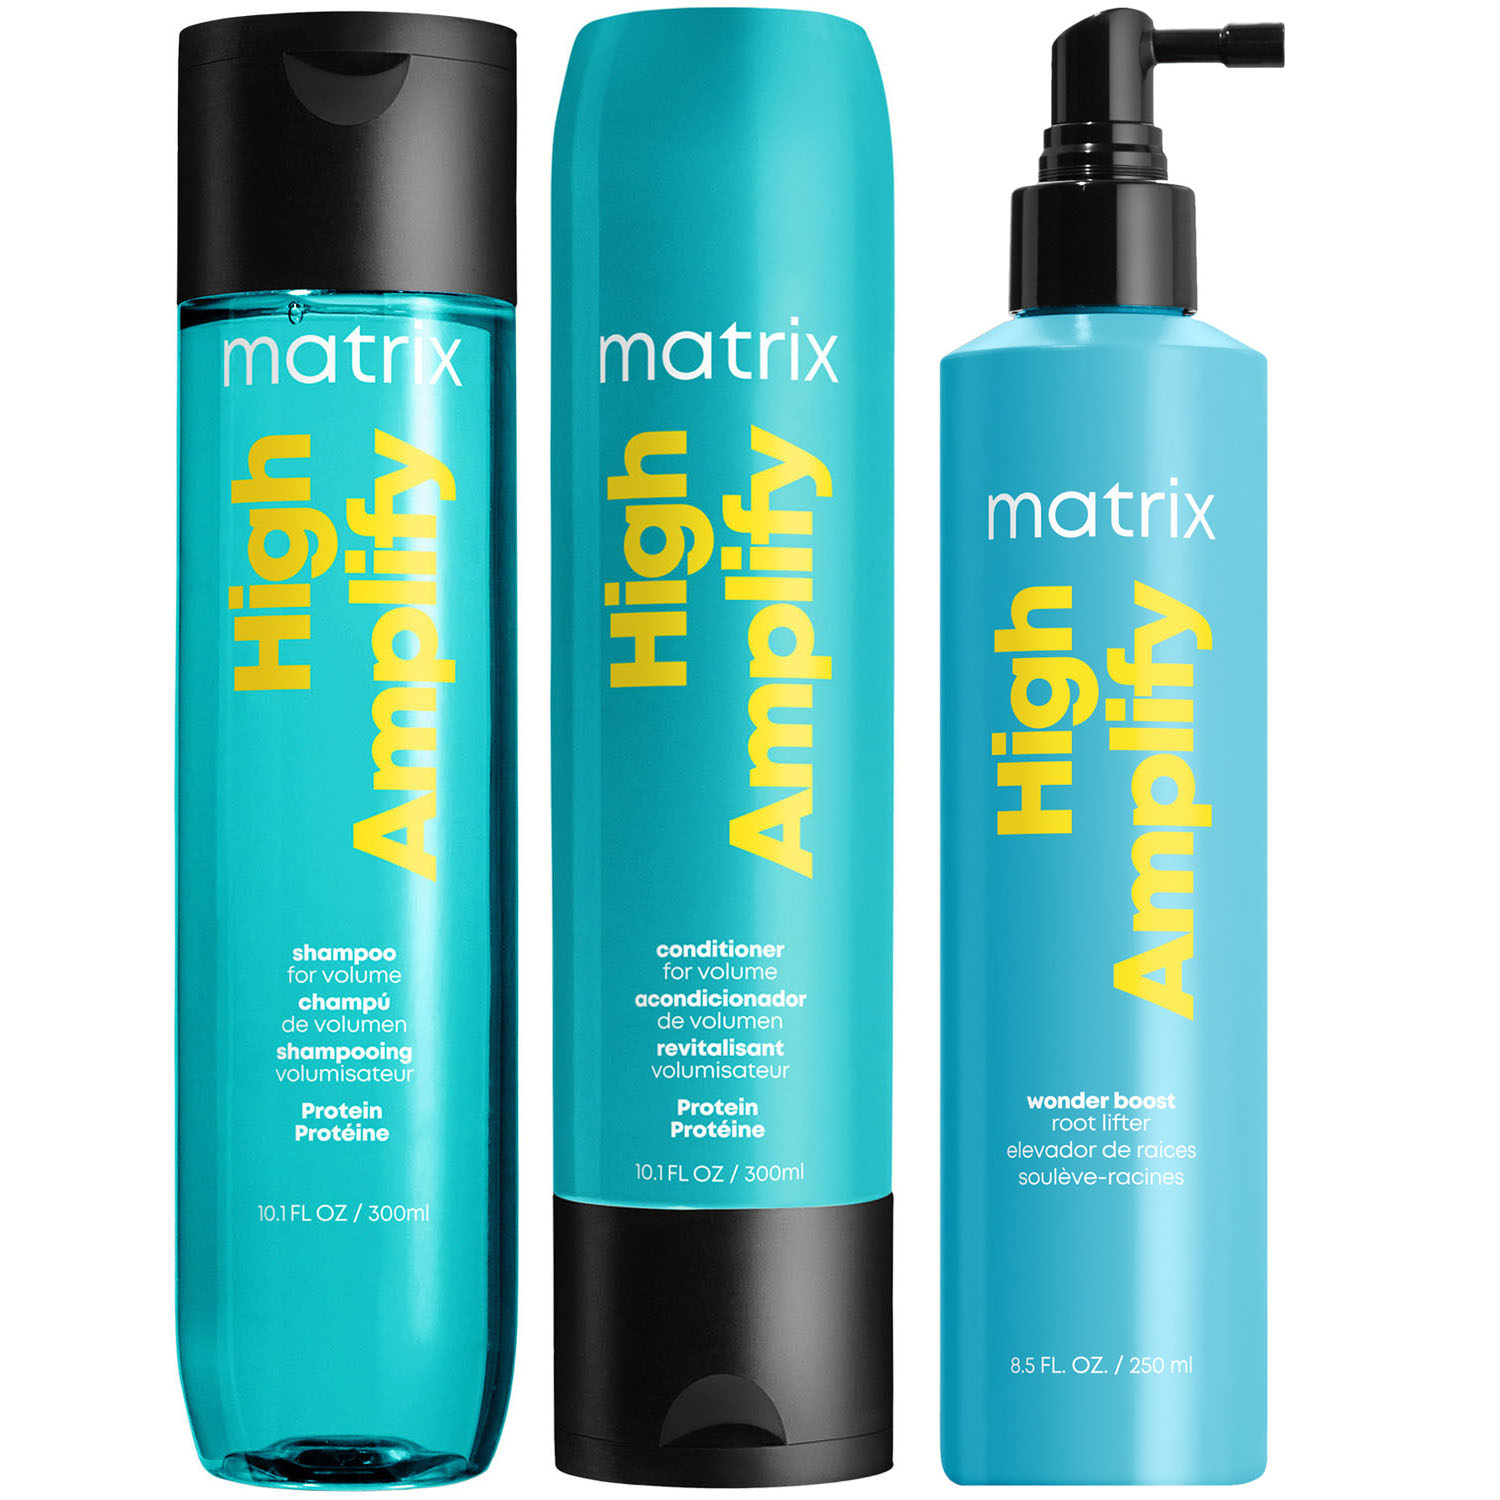 Matrix Набор для объема волос: шампунь 300 мл + кондиционер 300 мл + спрей 250 мл (Matrix, Total results) matrix набор для объема волос шампунь 300 мл кондиционер 300 мл спрей 250 мл